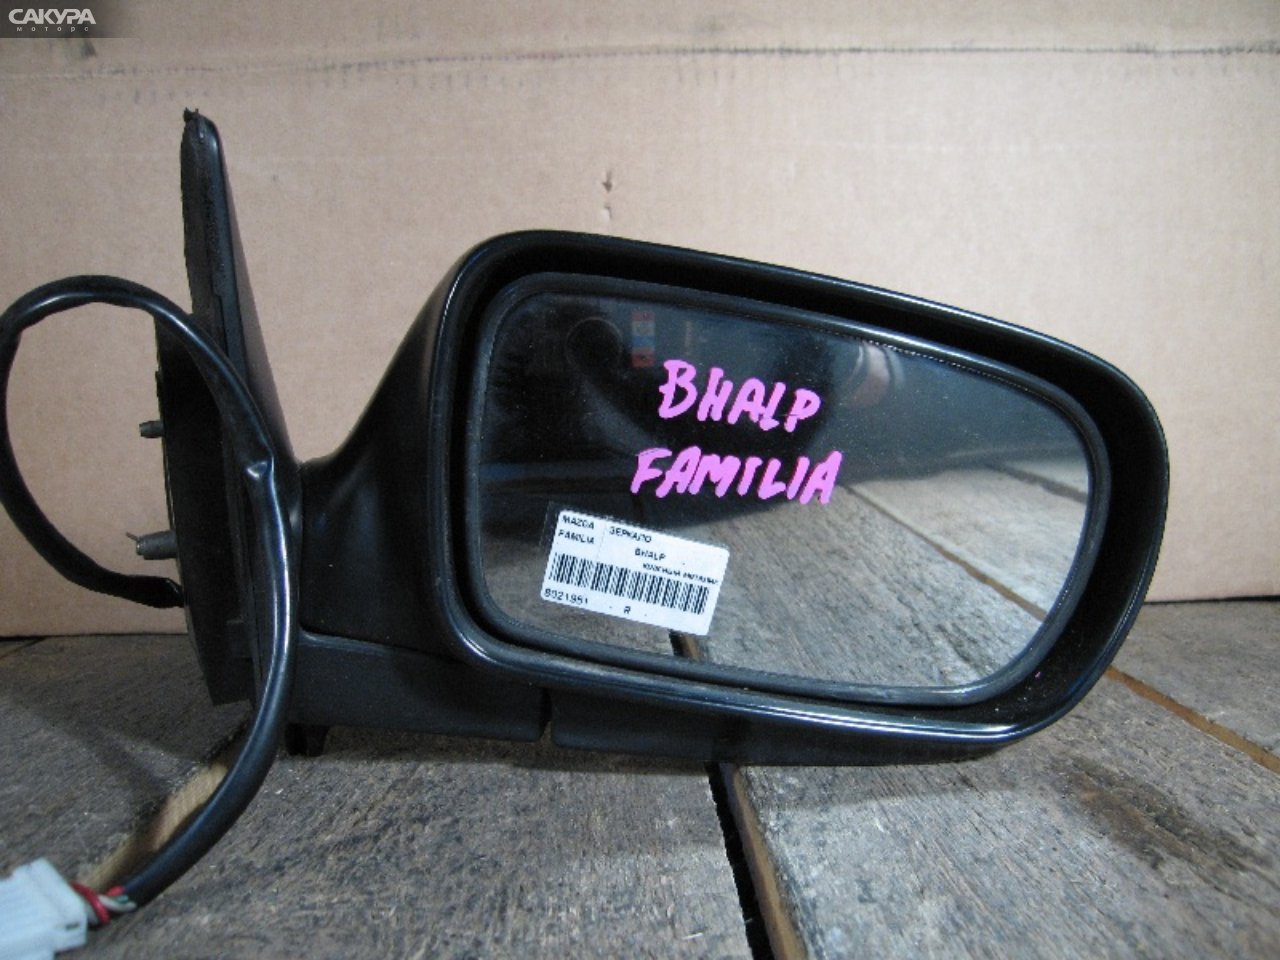 Зеркало боковое правое Mazda Familia BHALP: купить в Сакура Абакан.